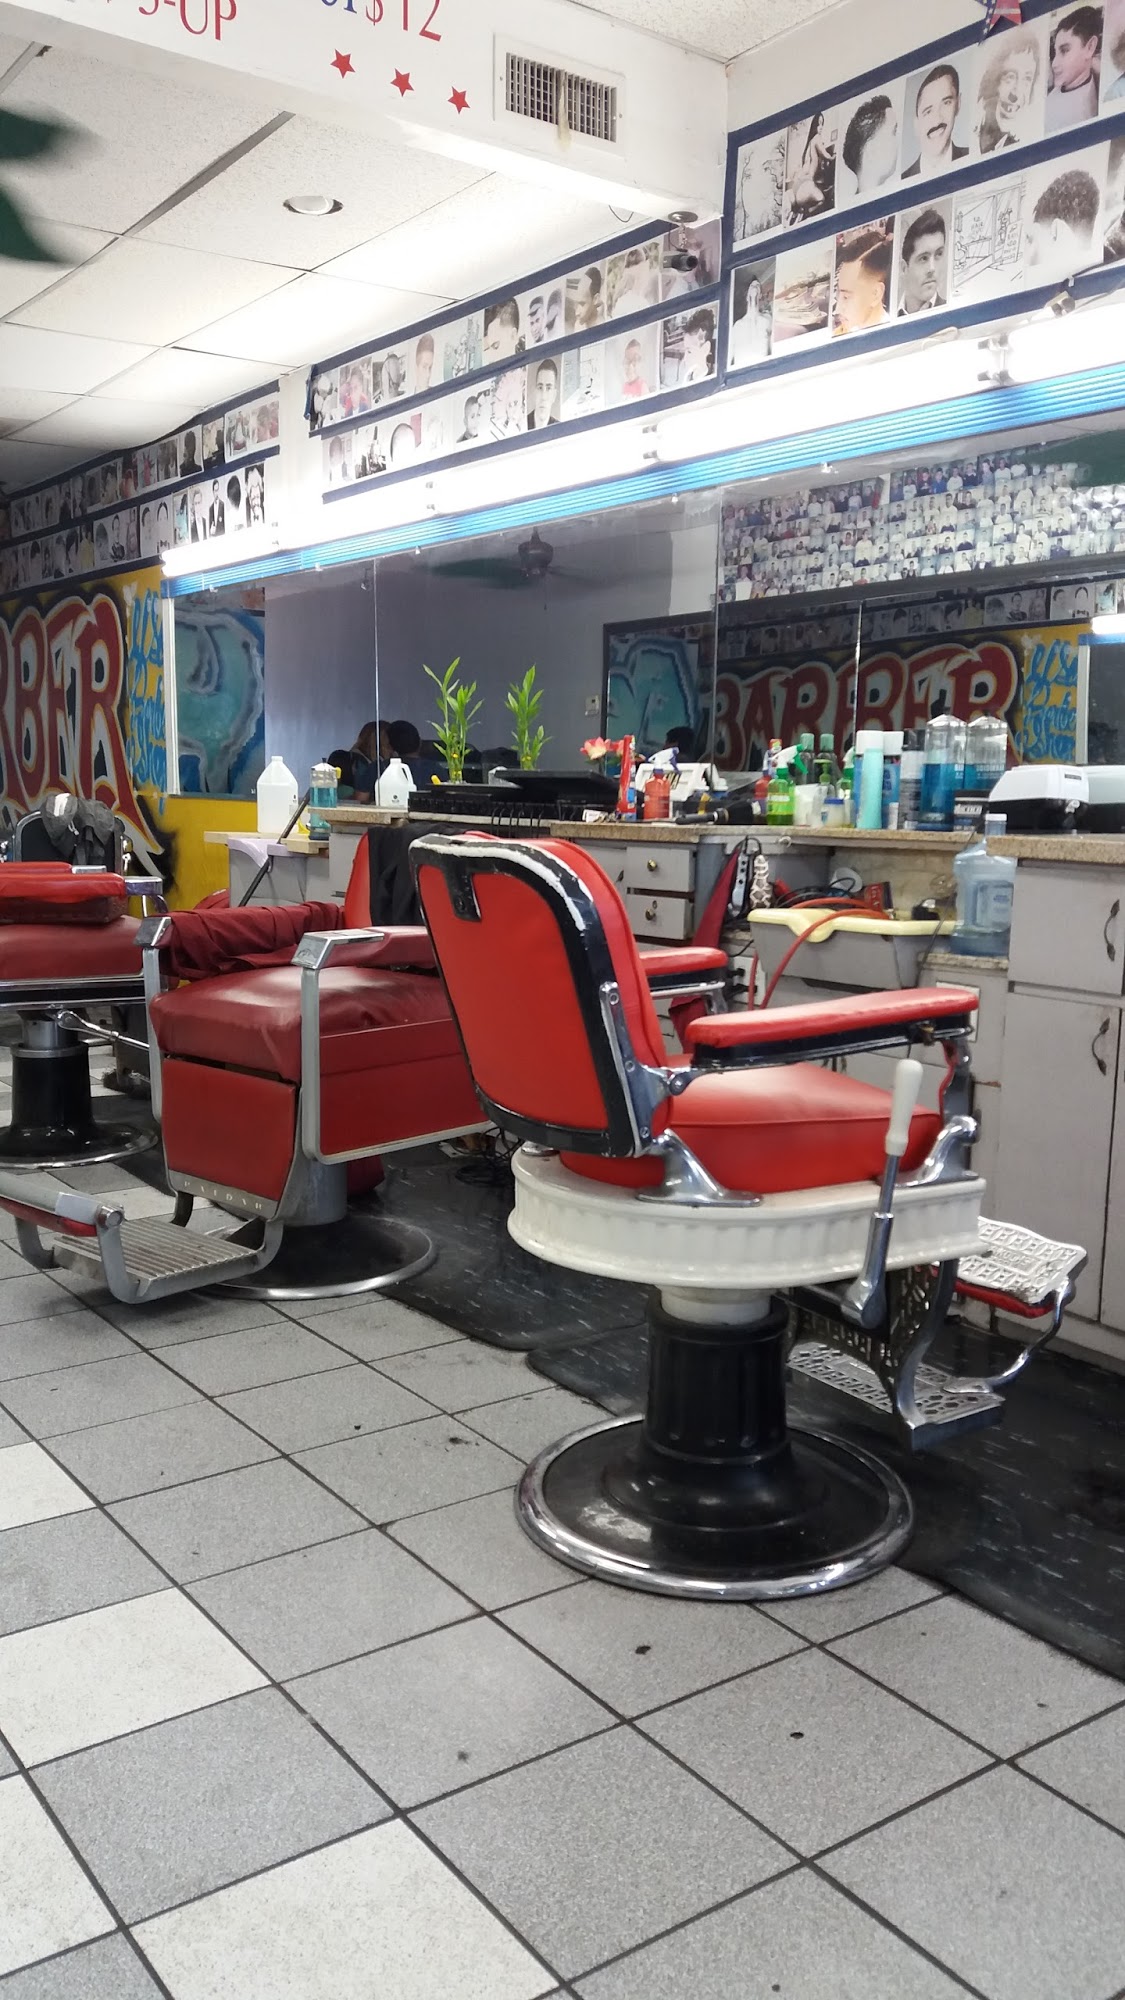 USA Barber Shop